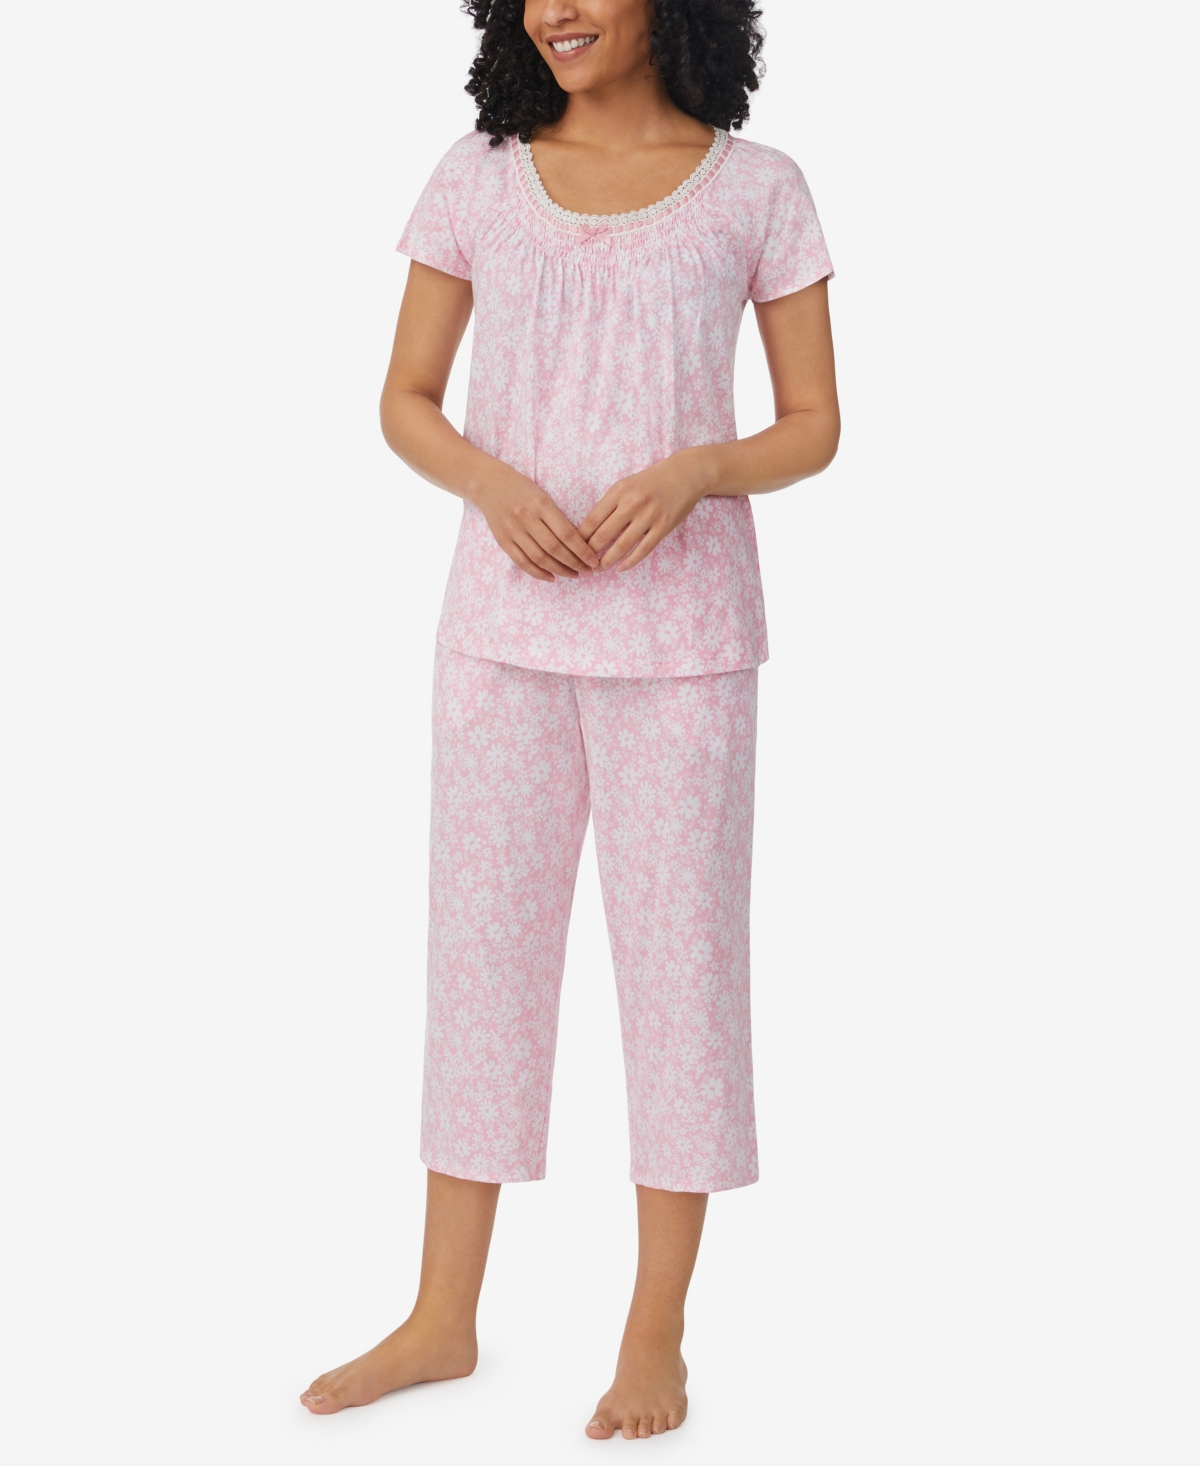 Aria Women's Cap Sleeve Capri 2 Piece Pajama Set In Pink Floral Daisy